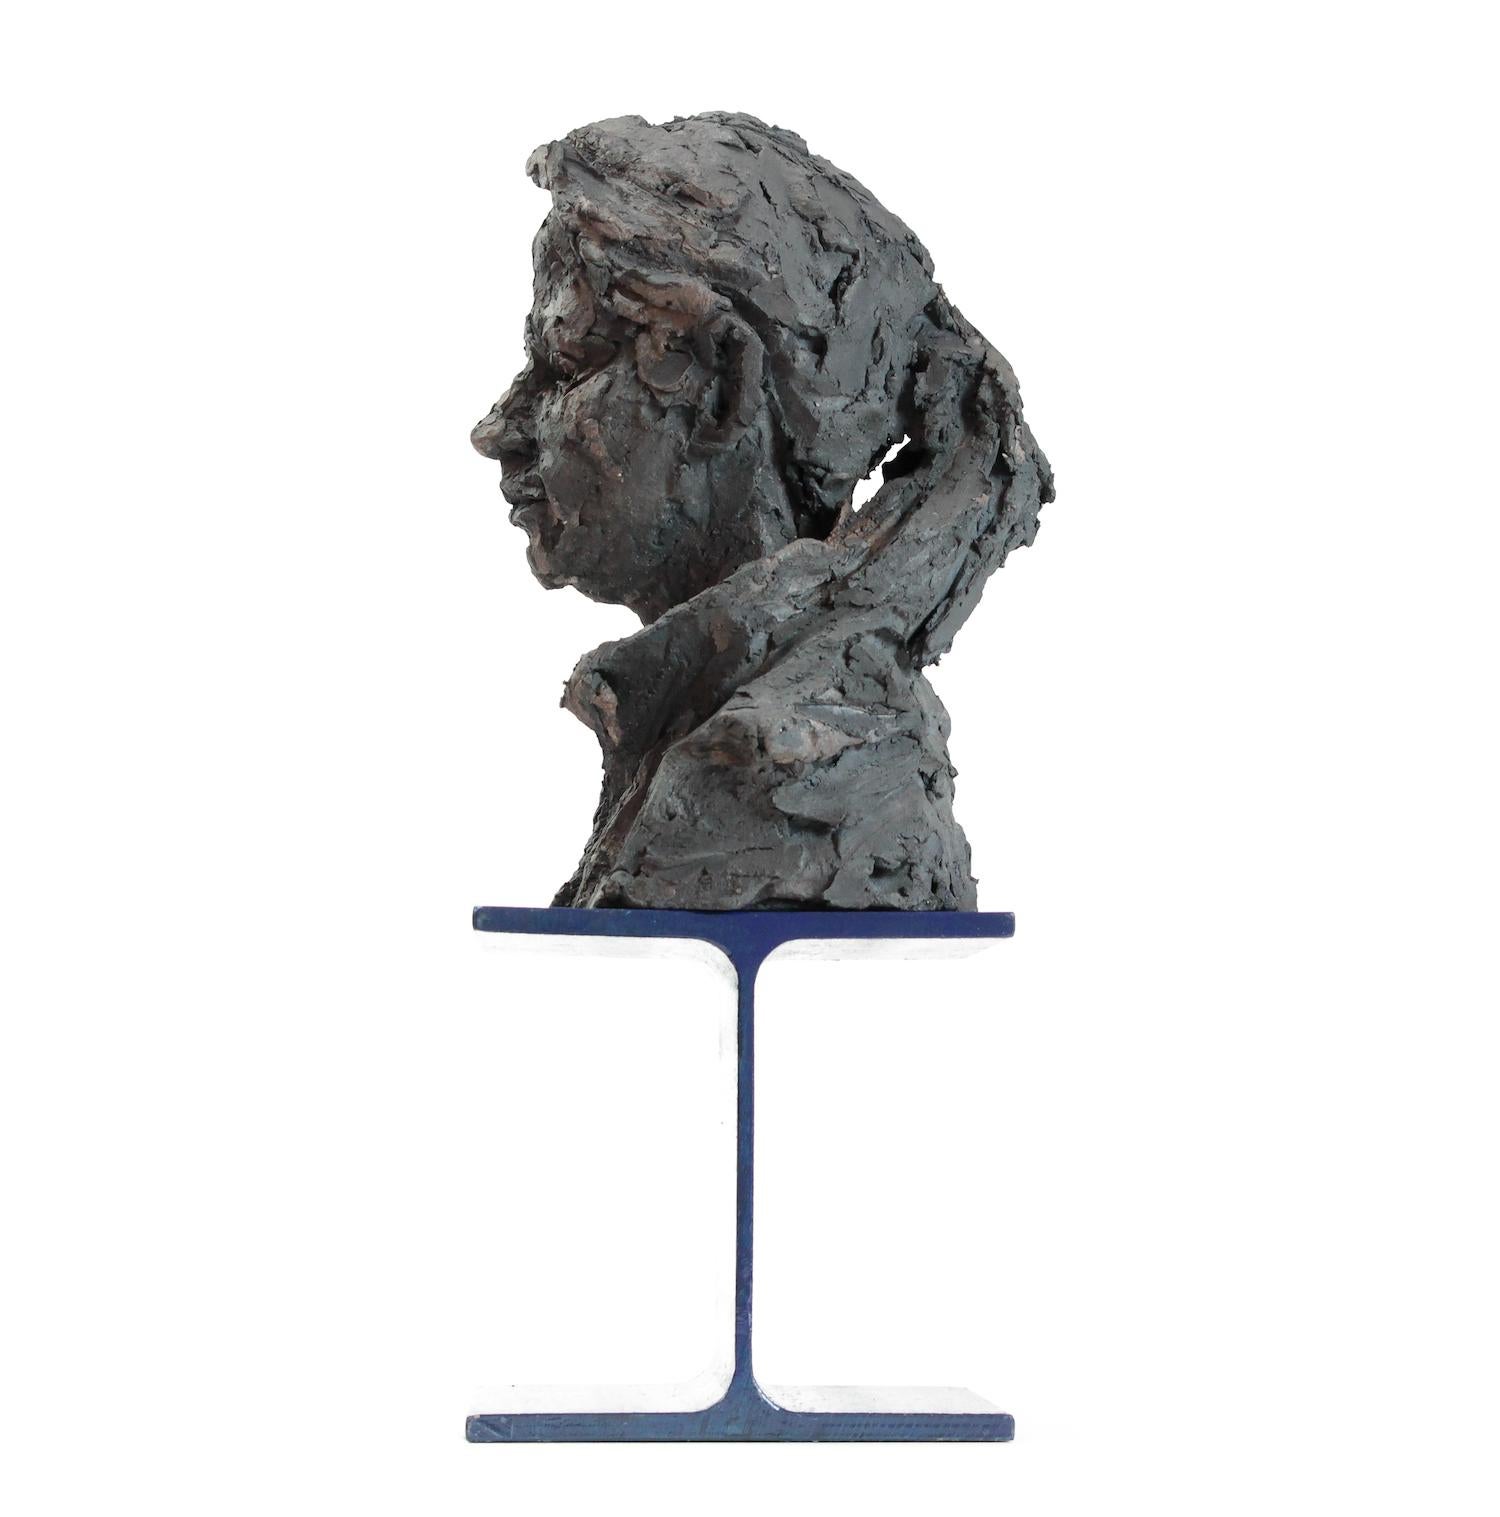 Clotilde by Cécile Raynal - portrait of a woman seafarer, ceramic sculpture For Sale 2